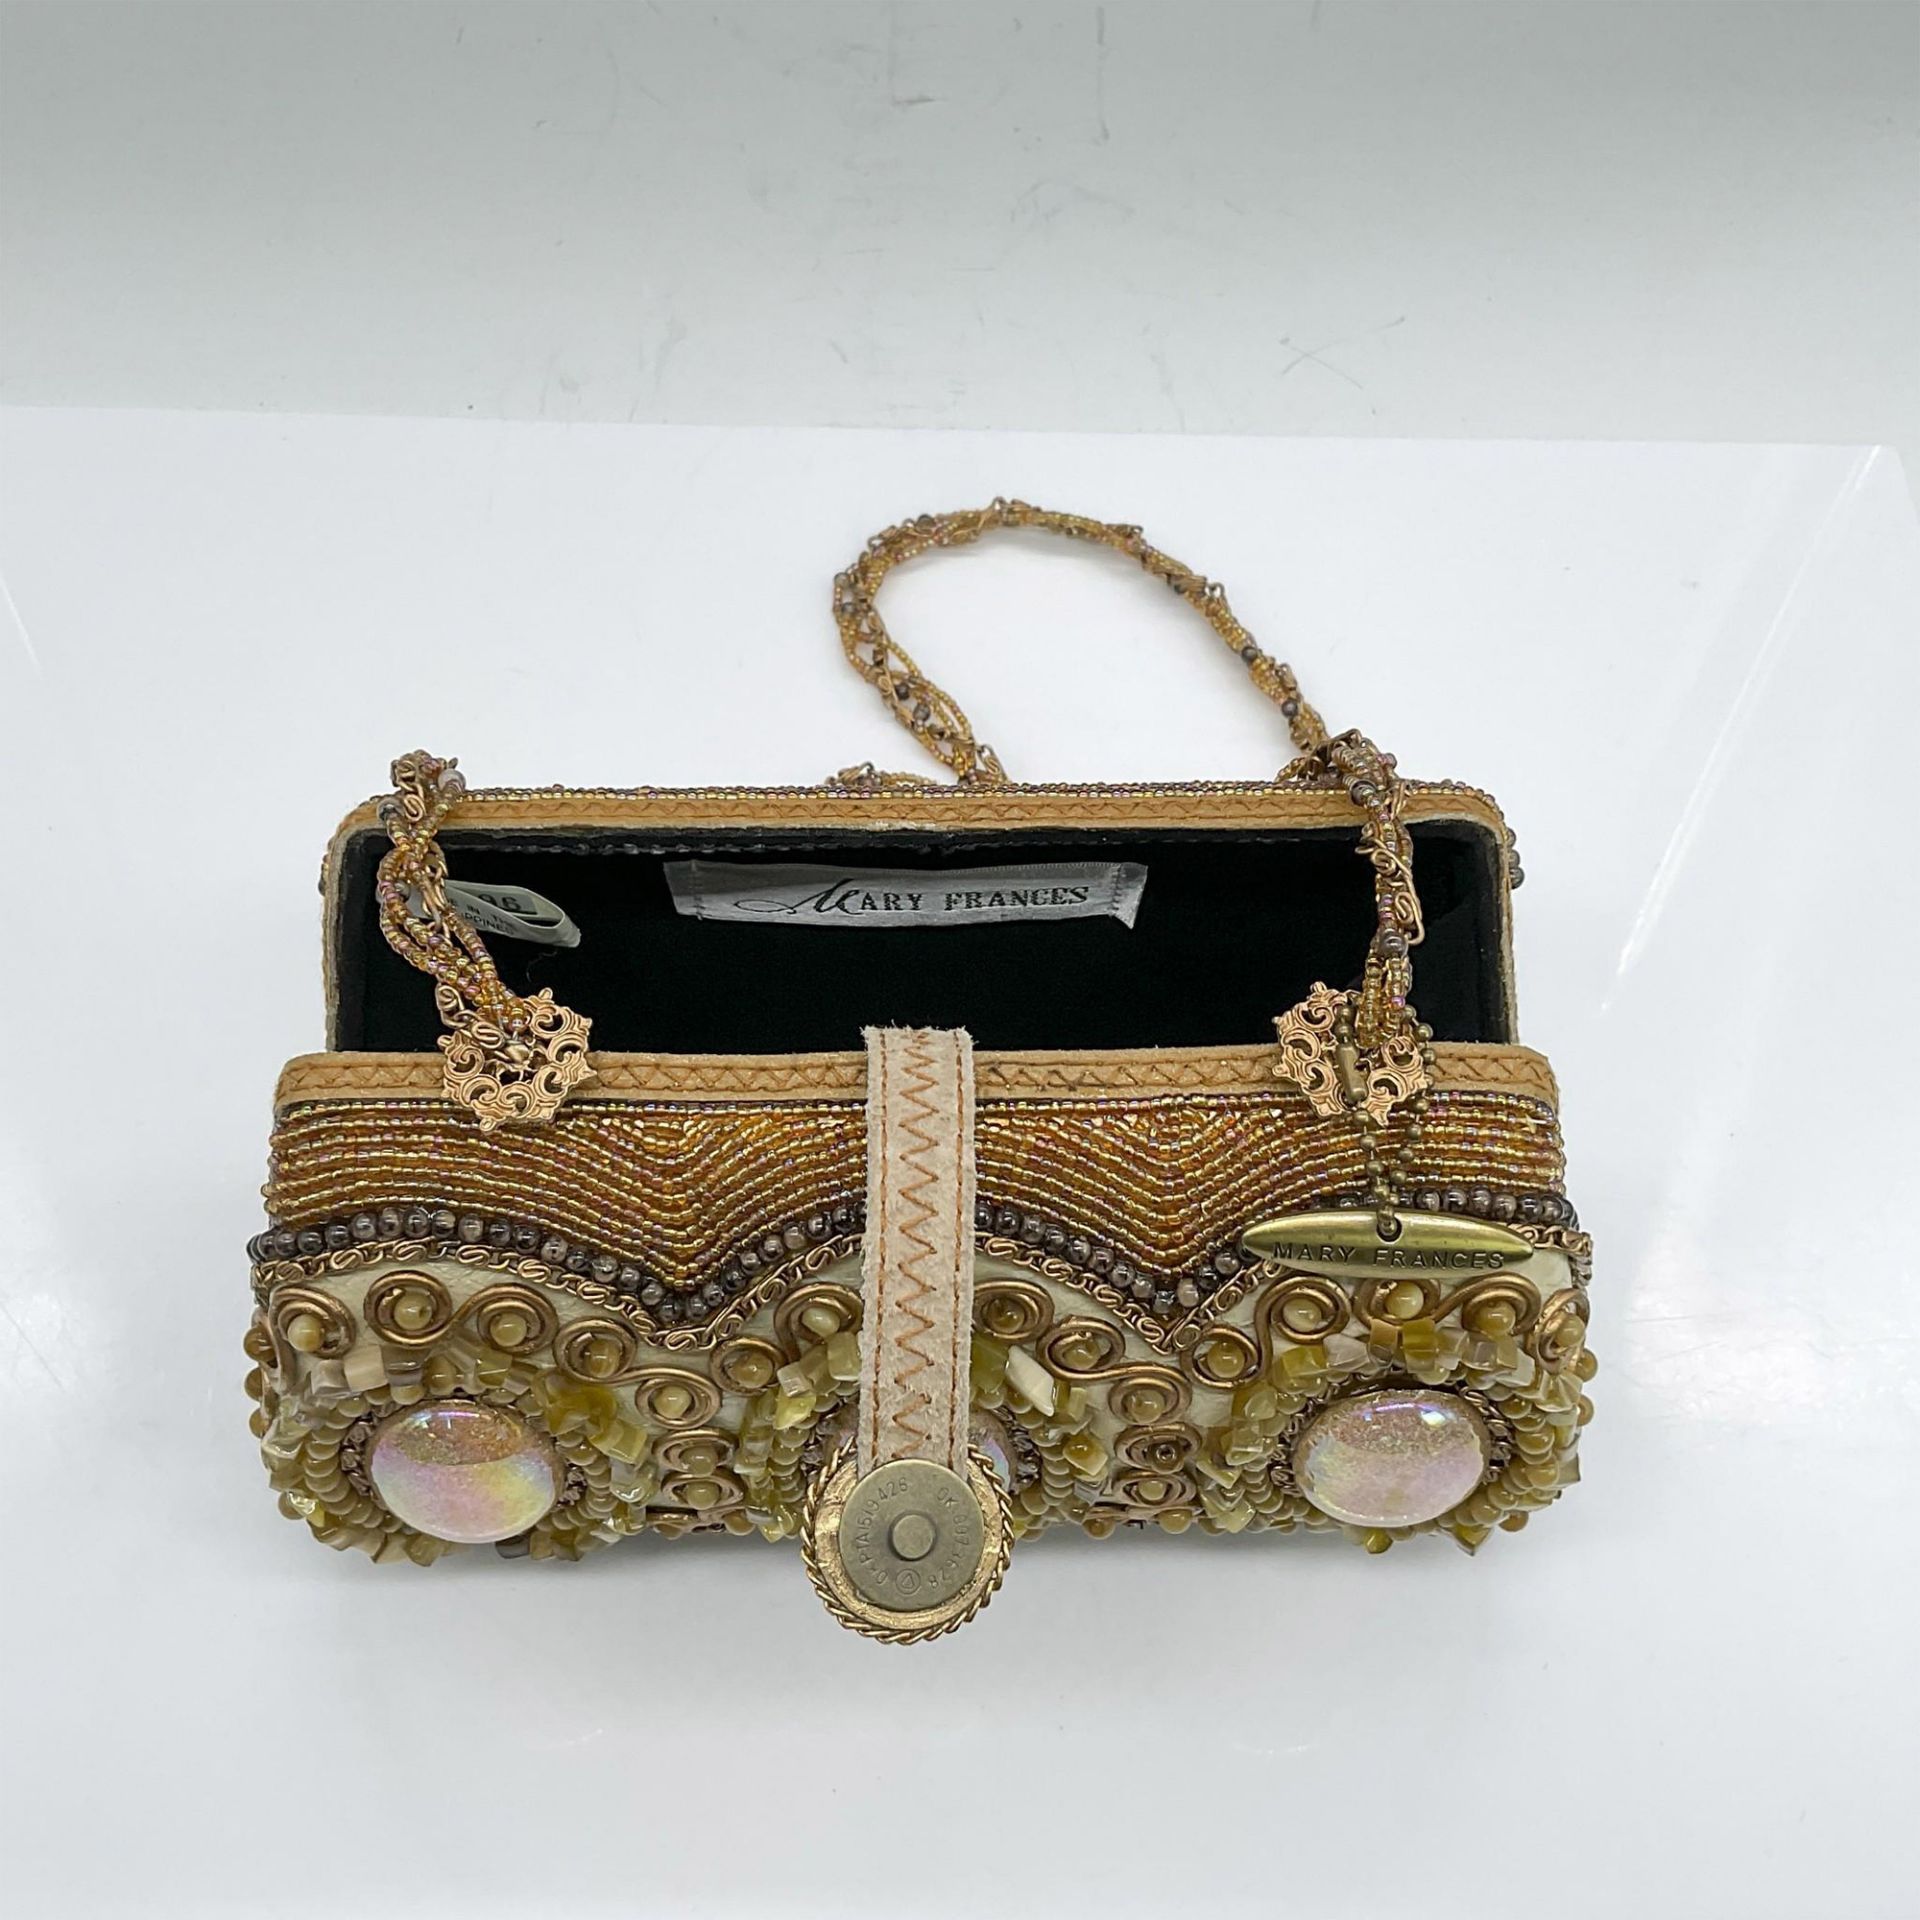 Mary Frances Beaded Leather Handbag, Tan/Amber - Image 4 of 5